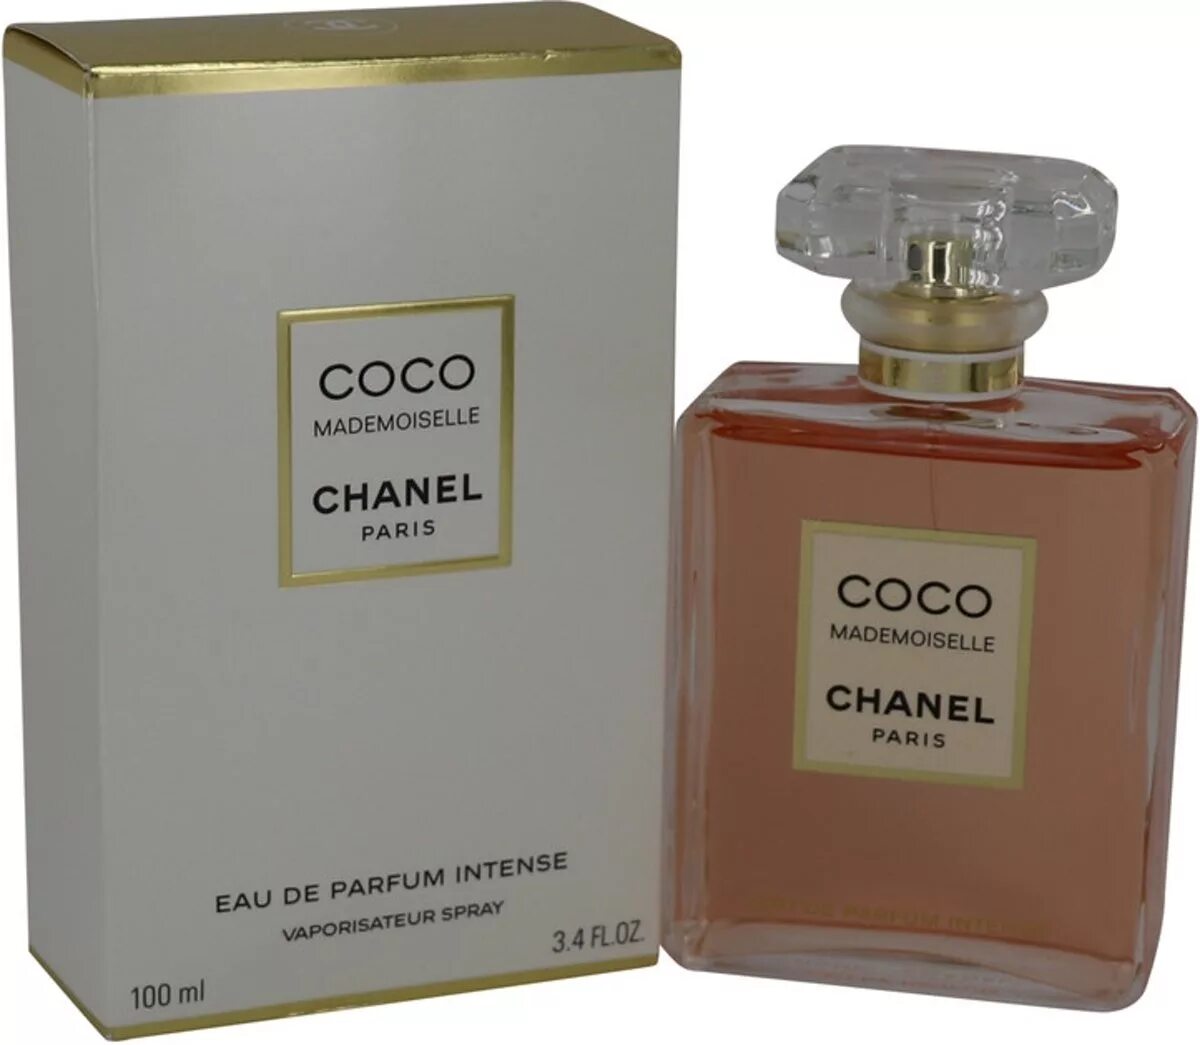 Chanel mademoiselle 100ml. Chanel Coco Mademoiselle intense EDP 100 ml. Coco Mademoiselle Chanel, 100ml, EDP. Chanel Coco Mademoiselle Eau de Parfum 100 ml (woman).